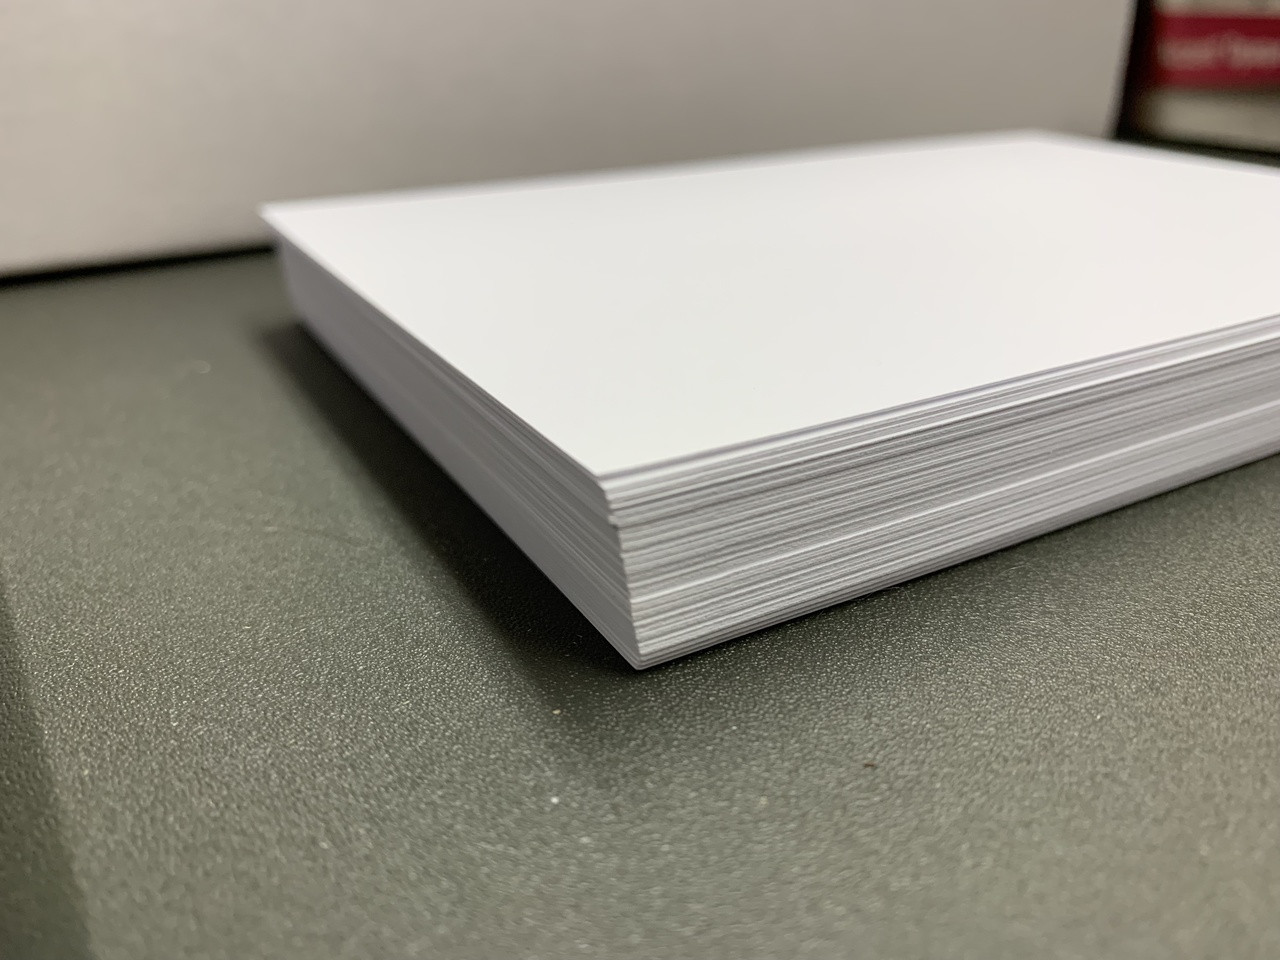 Pack  White 4x6 Card Stock (50 sheets) - Pretty Little Studio